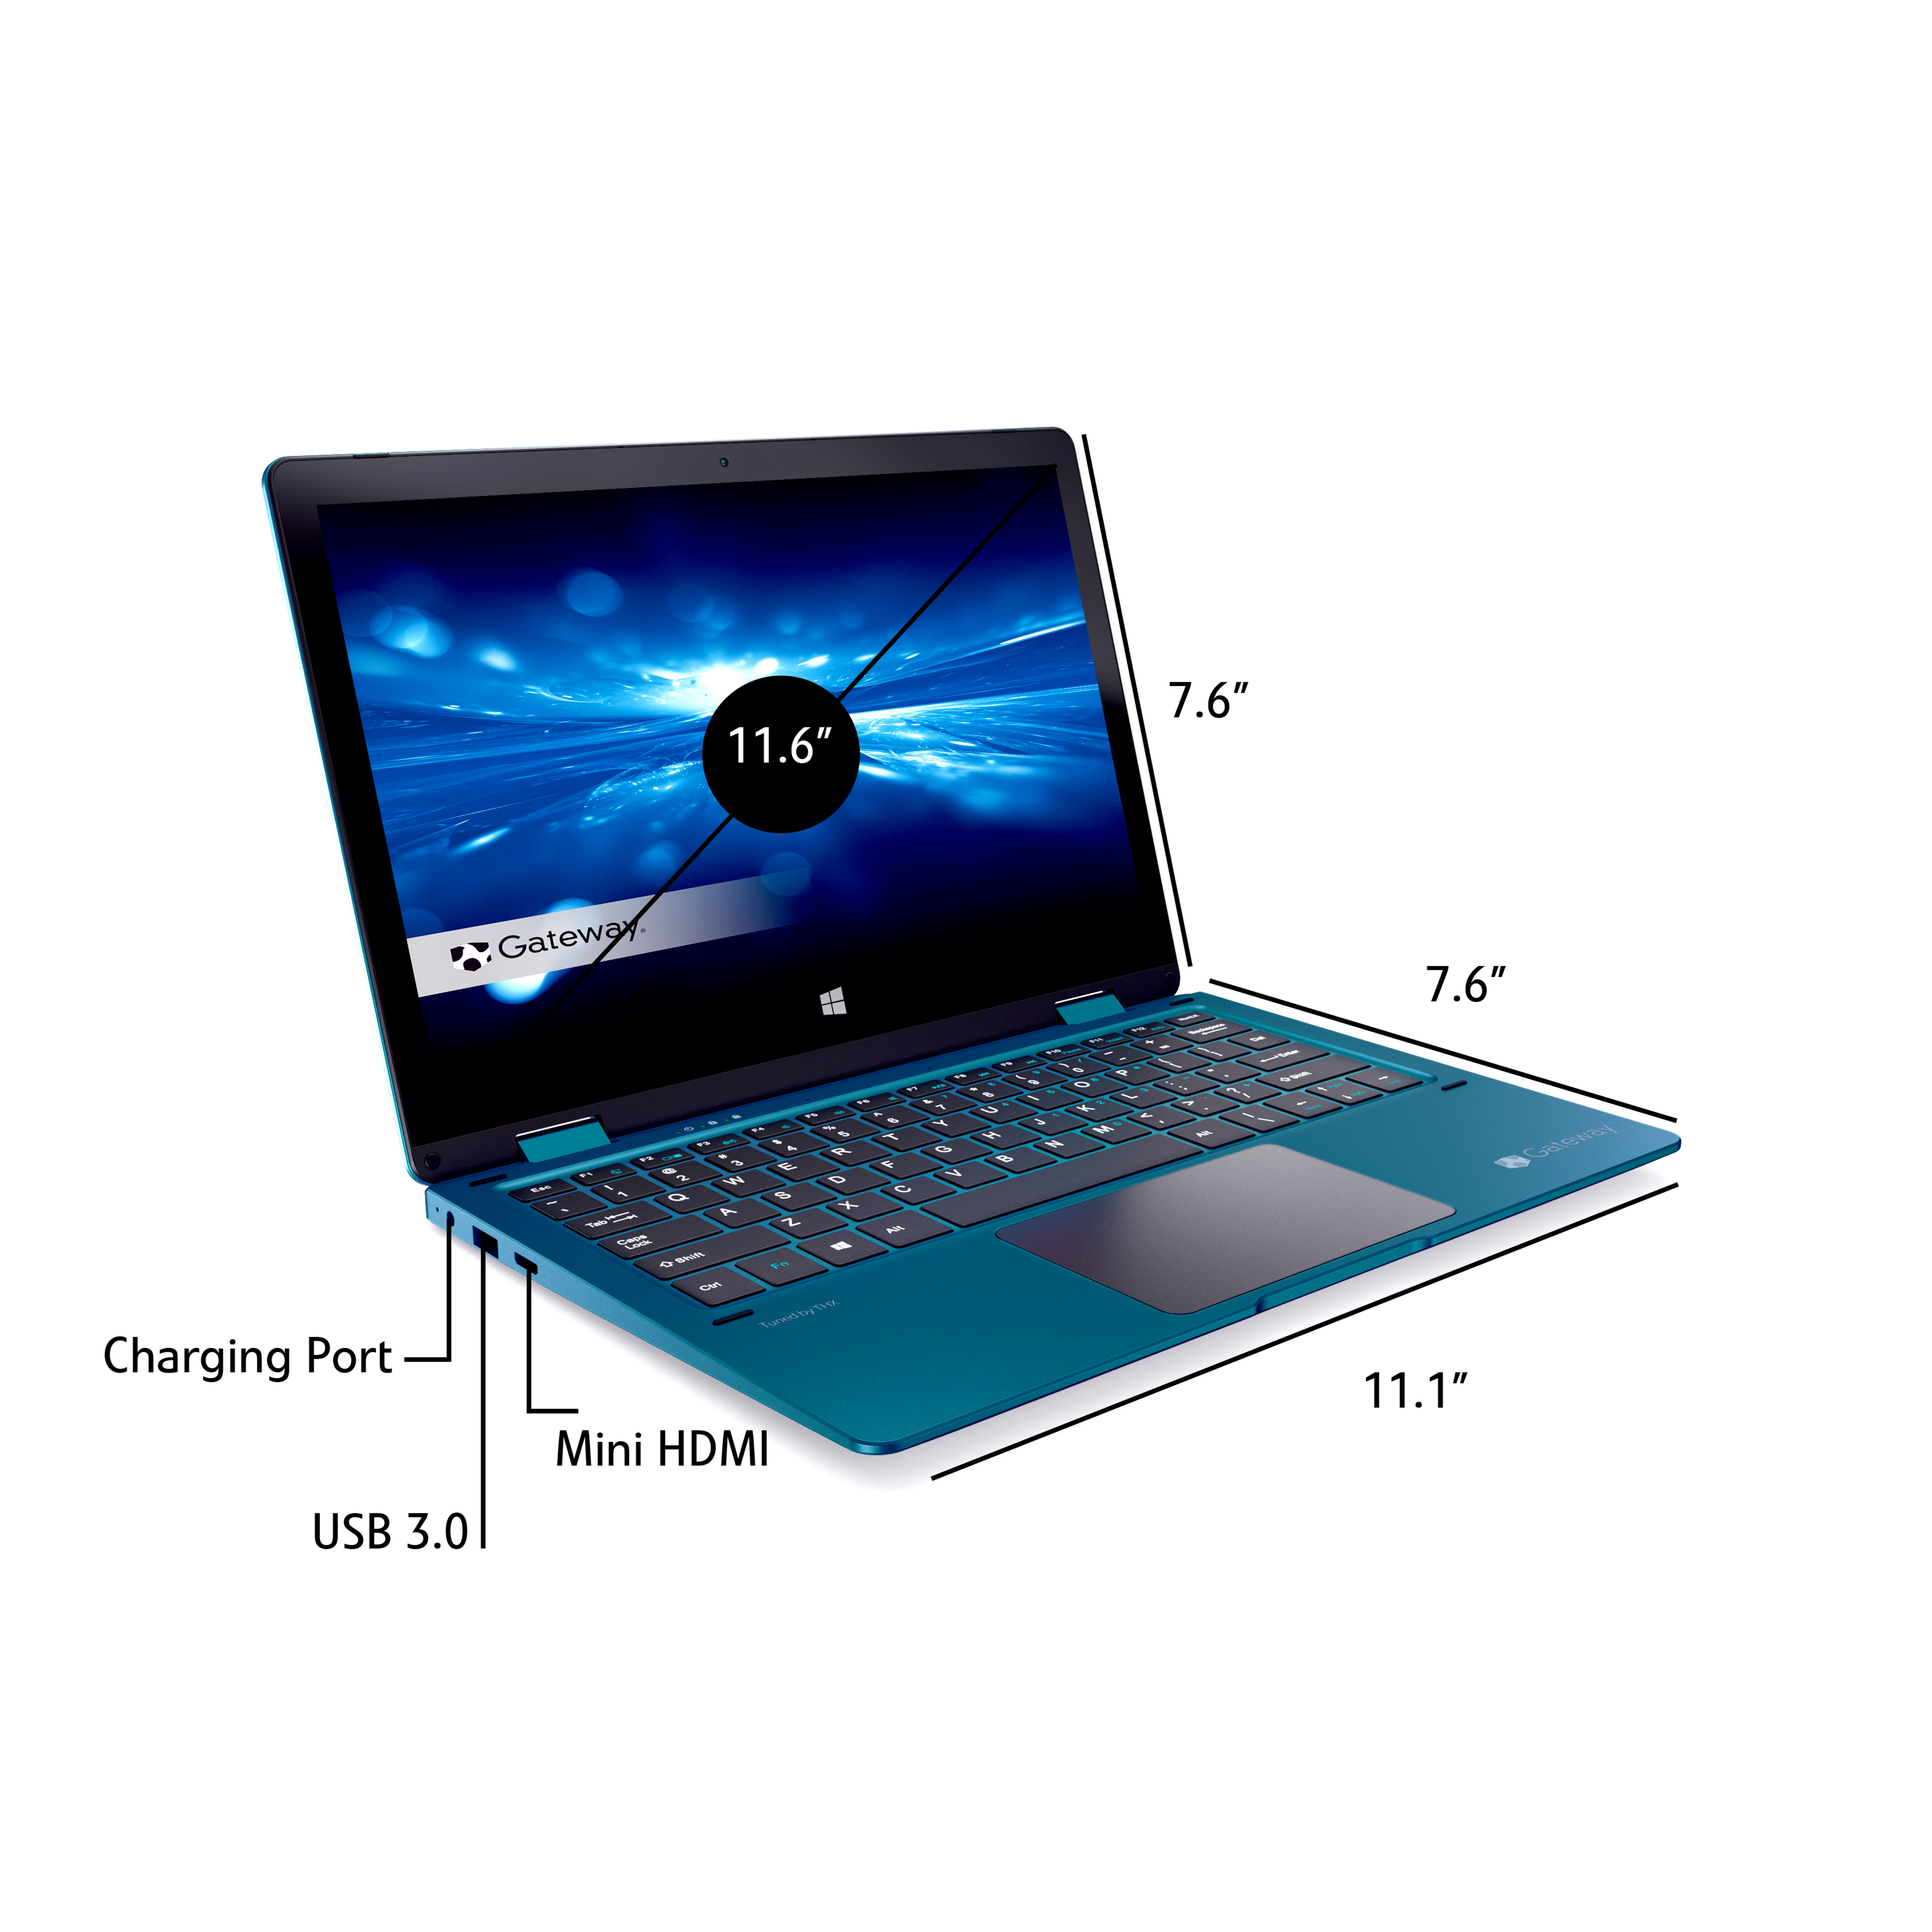 Gateway Notebook 11.6" Touchscreen 2-in-1s Laptop, Intel Celeron N4020, 4GB RAM, 64GB HD, Windows 10 Home, Blue, GWTC116-2BL - image 6 of 8